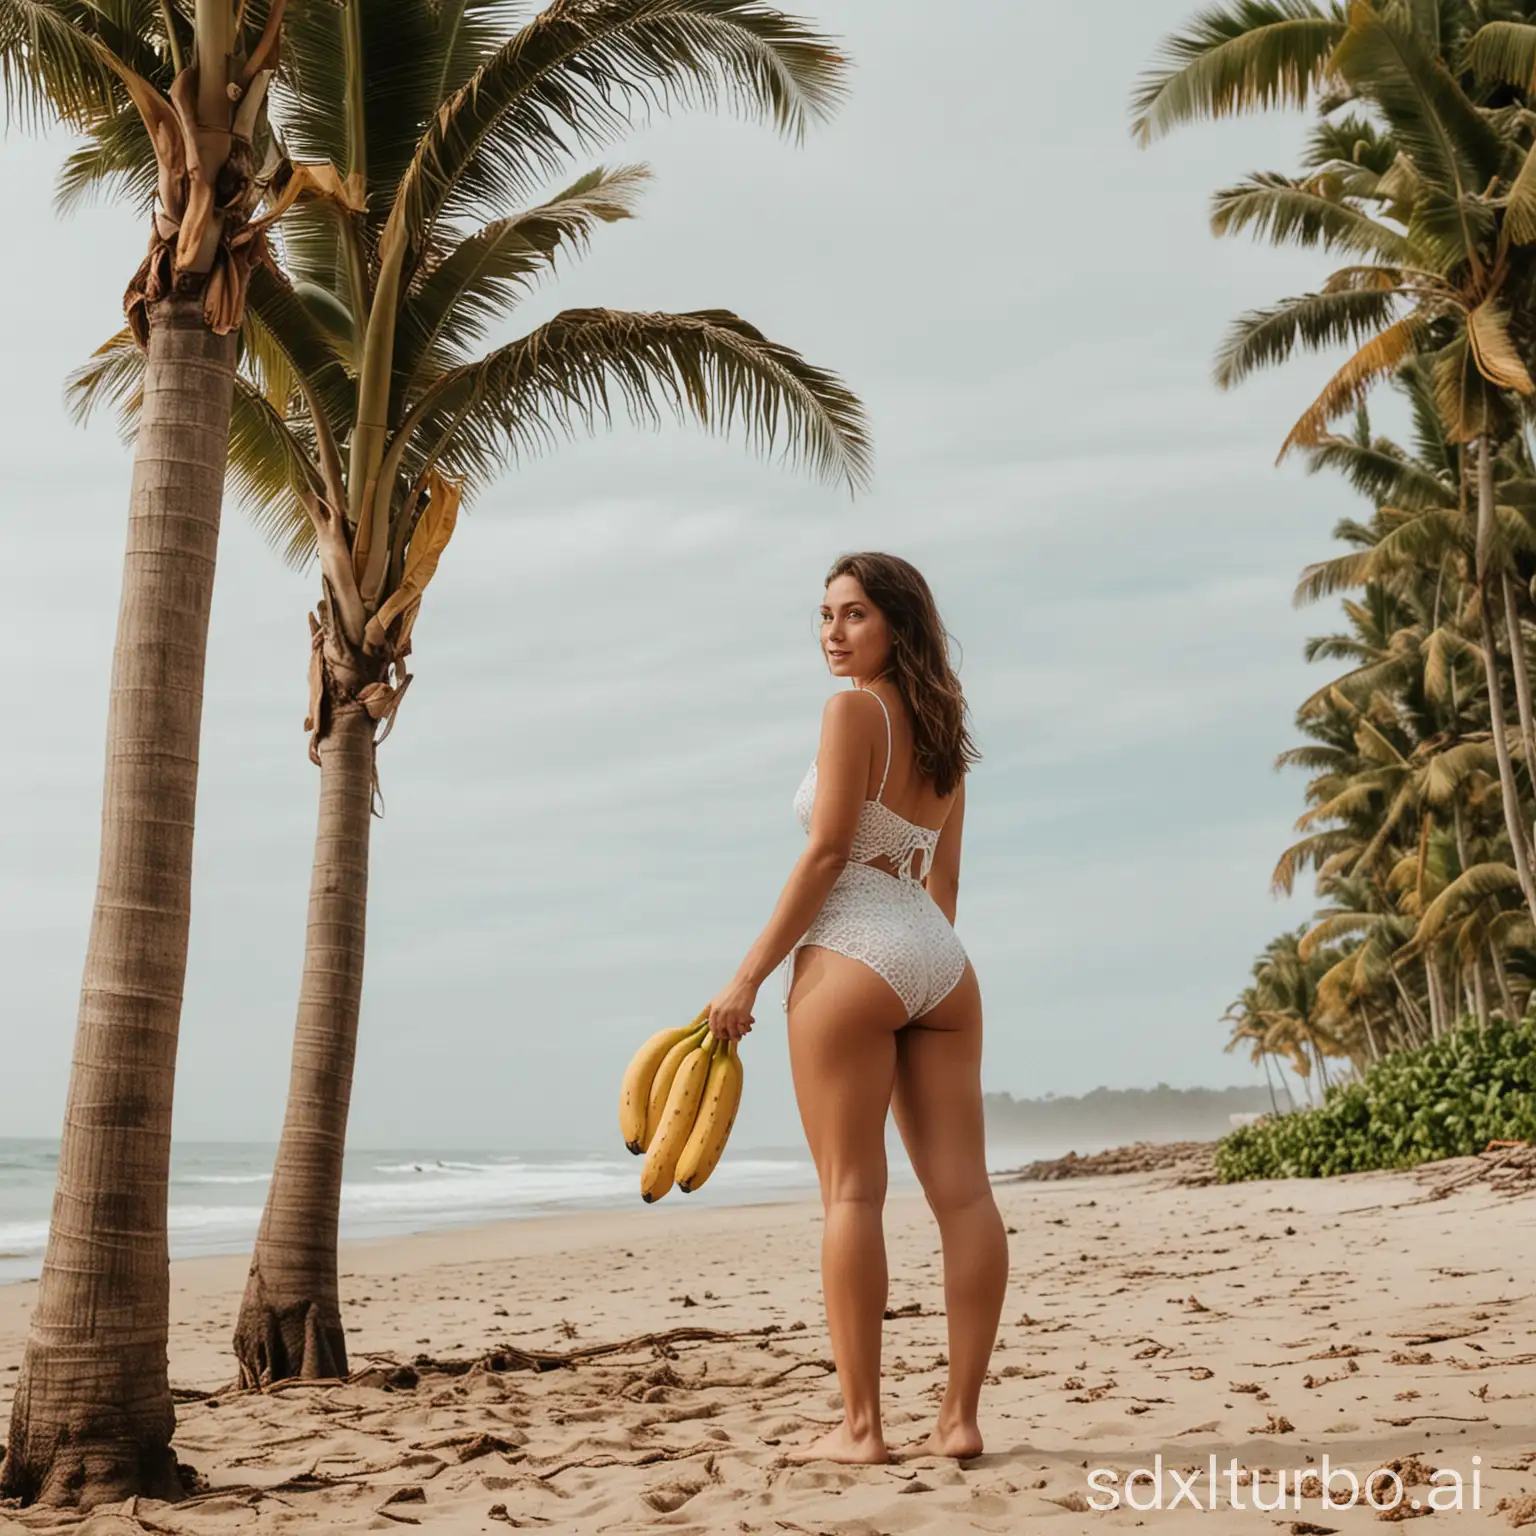 woman standing on the beach, banana trees